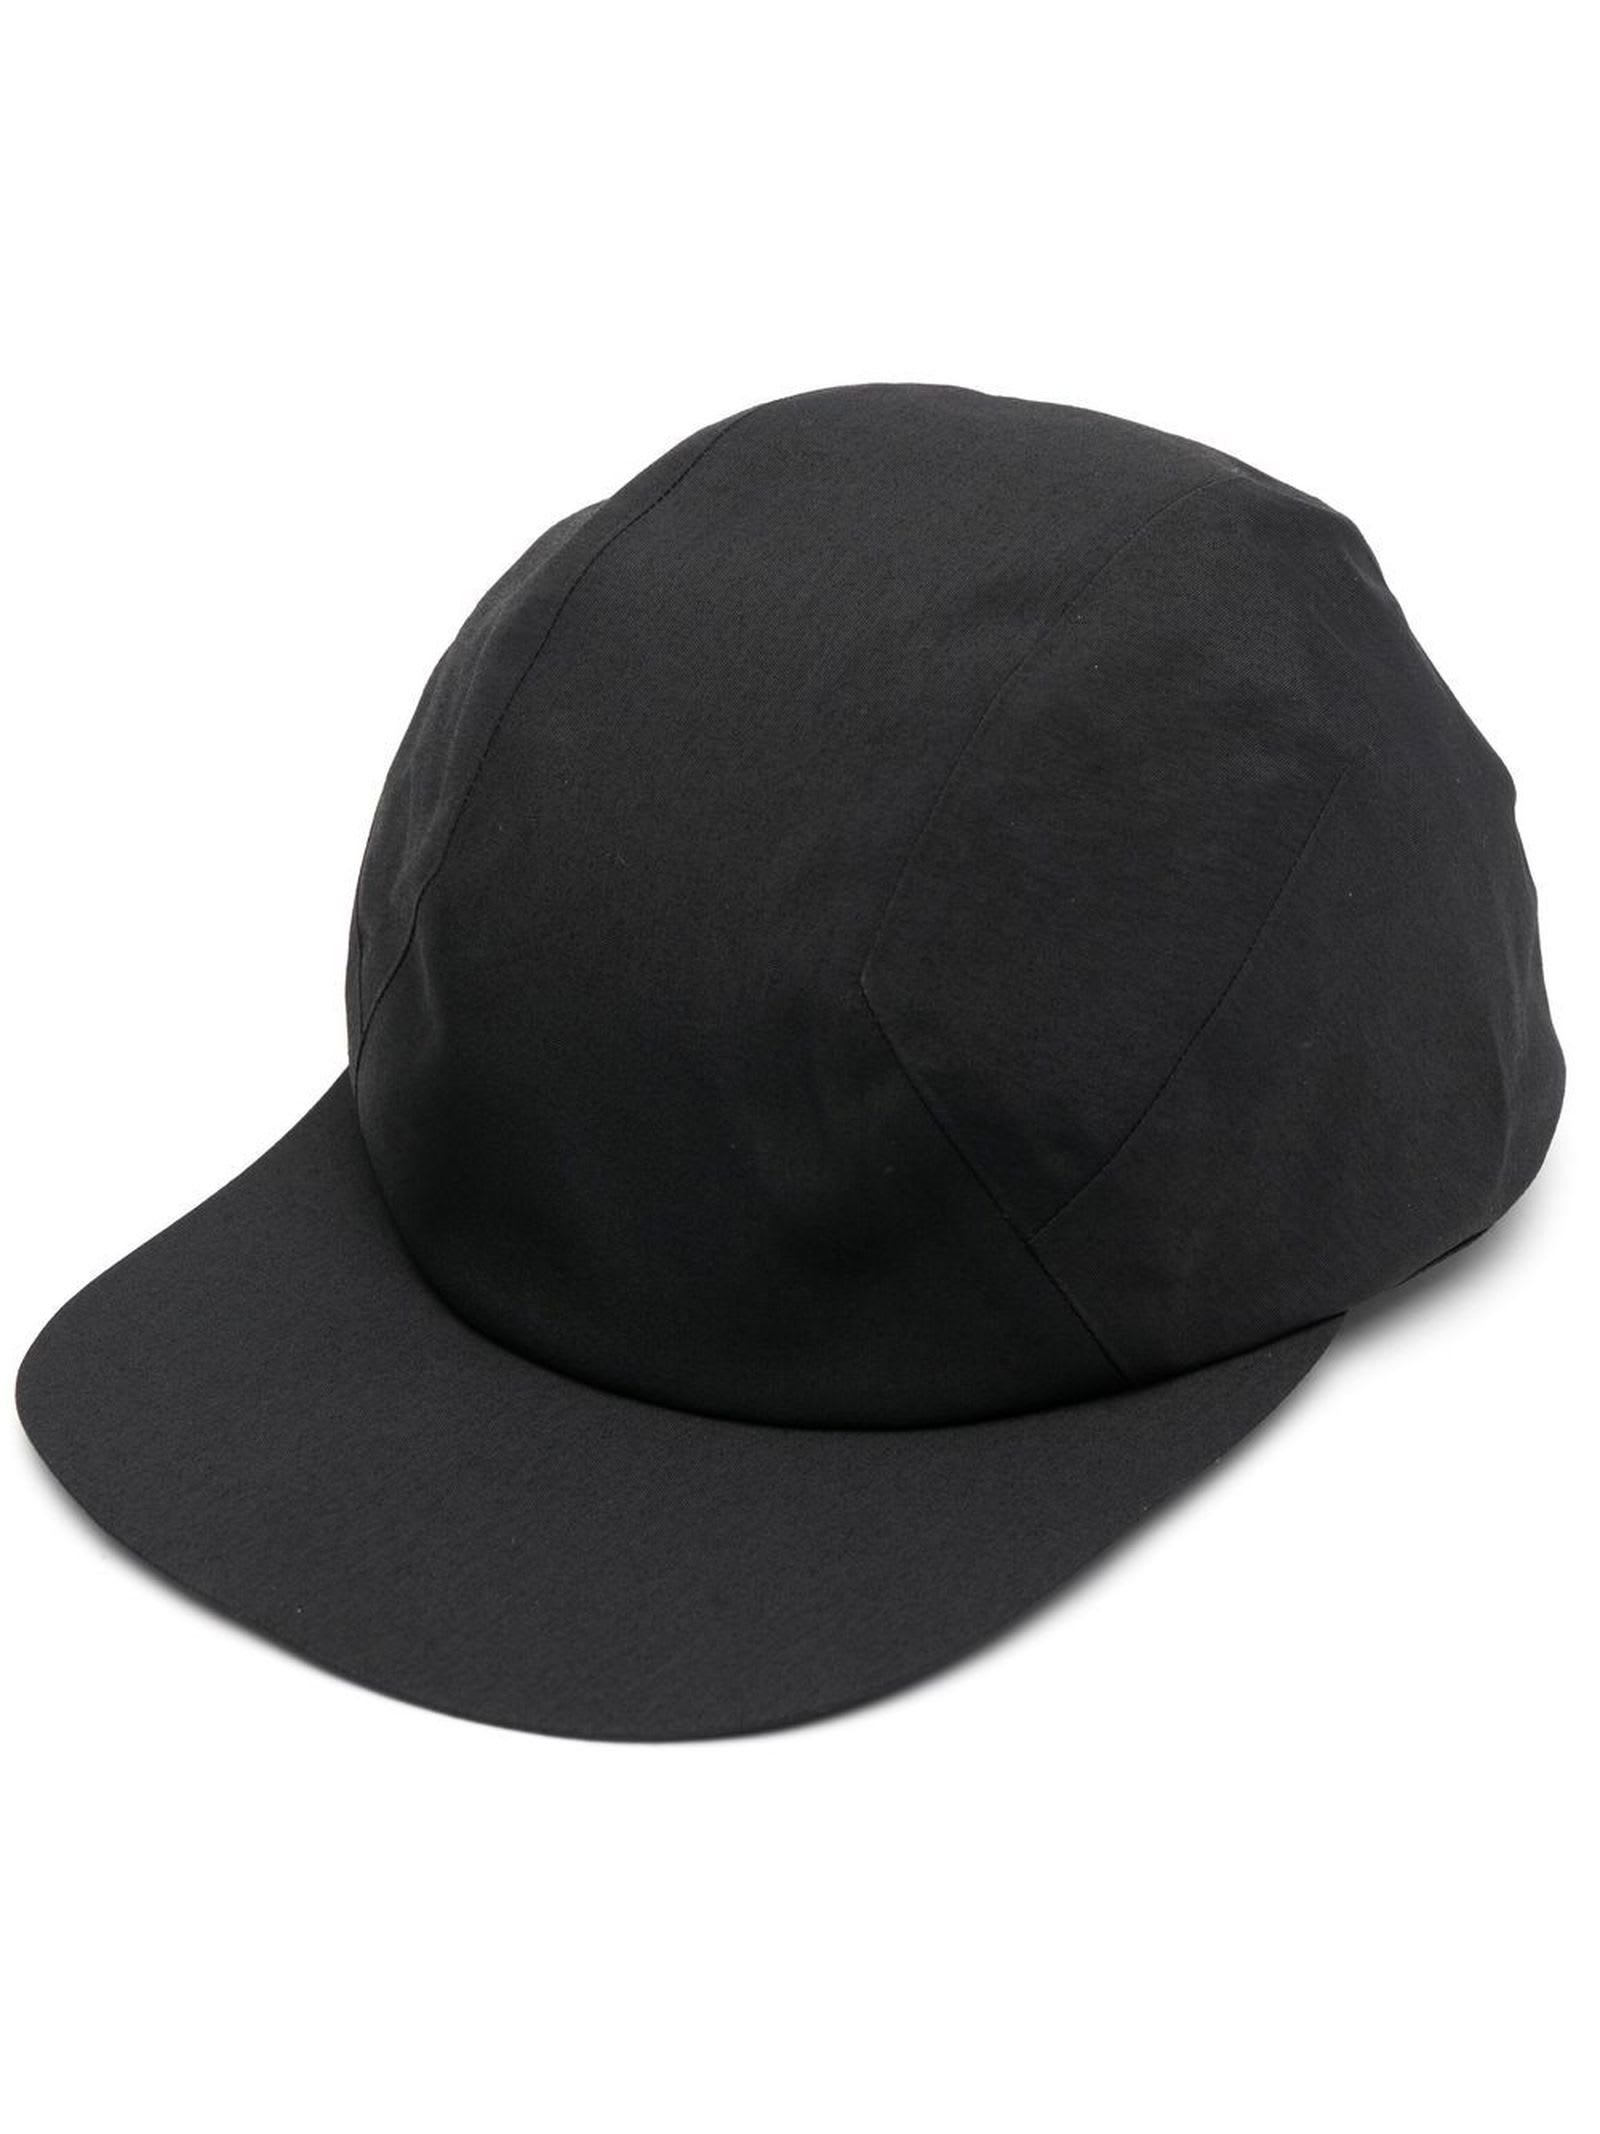 Veilance Hats Black